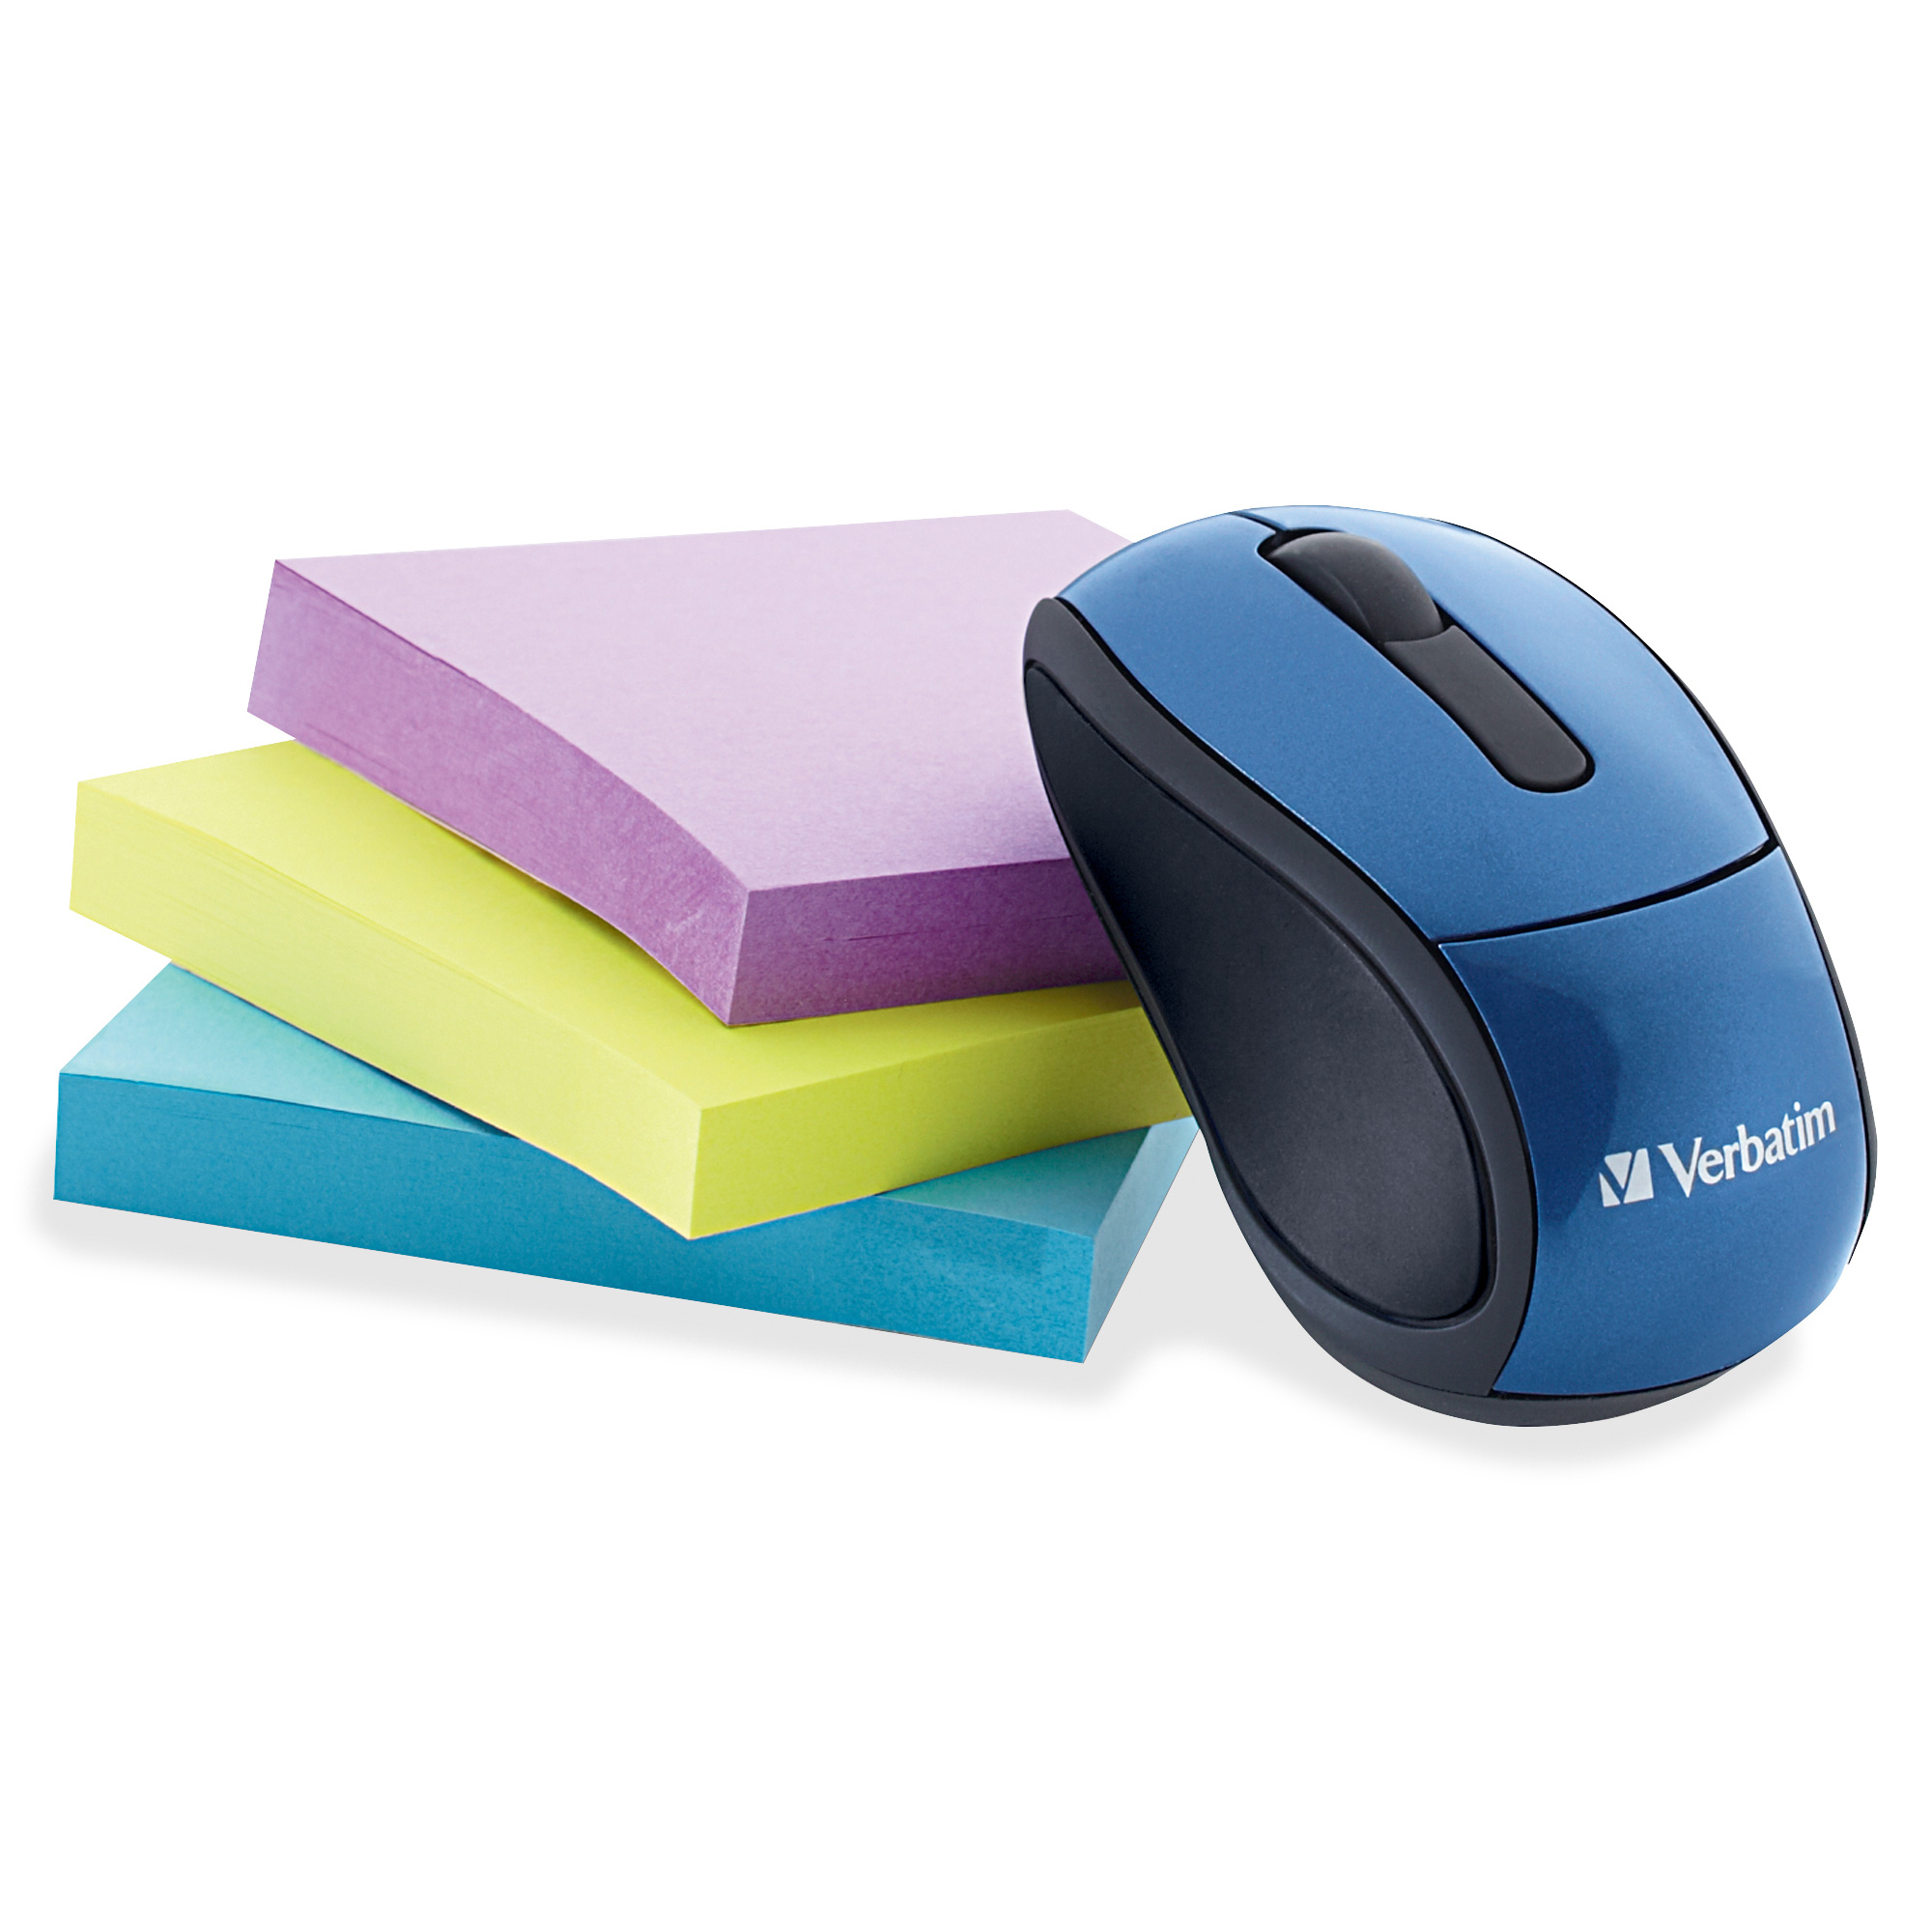 Verbatim 97471 Wireless Mini Travel Mouse (Blue) - image 4 of 7